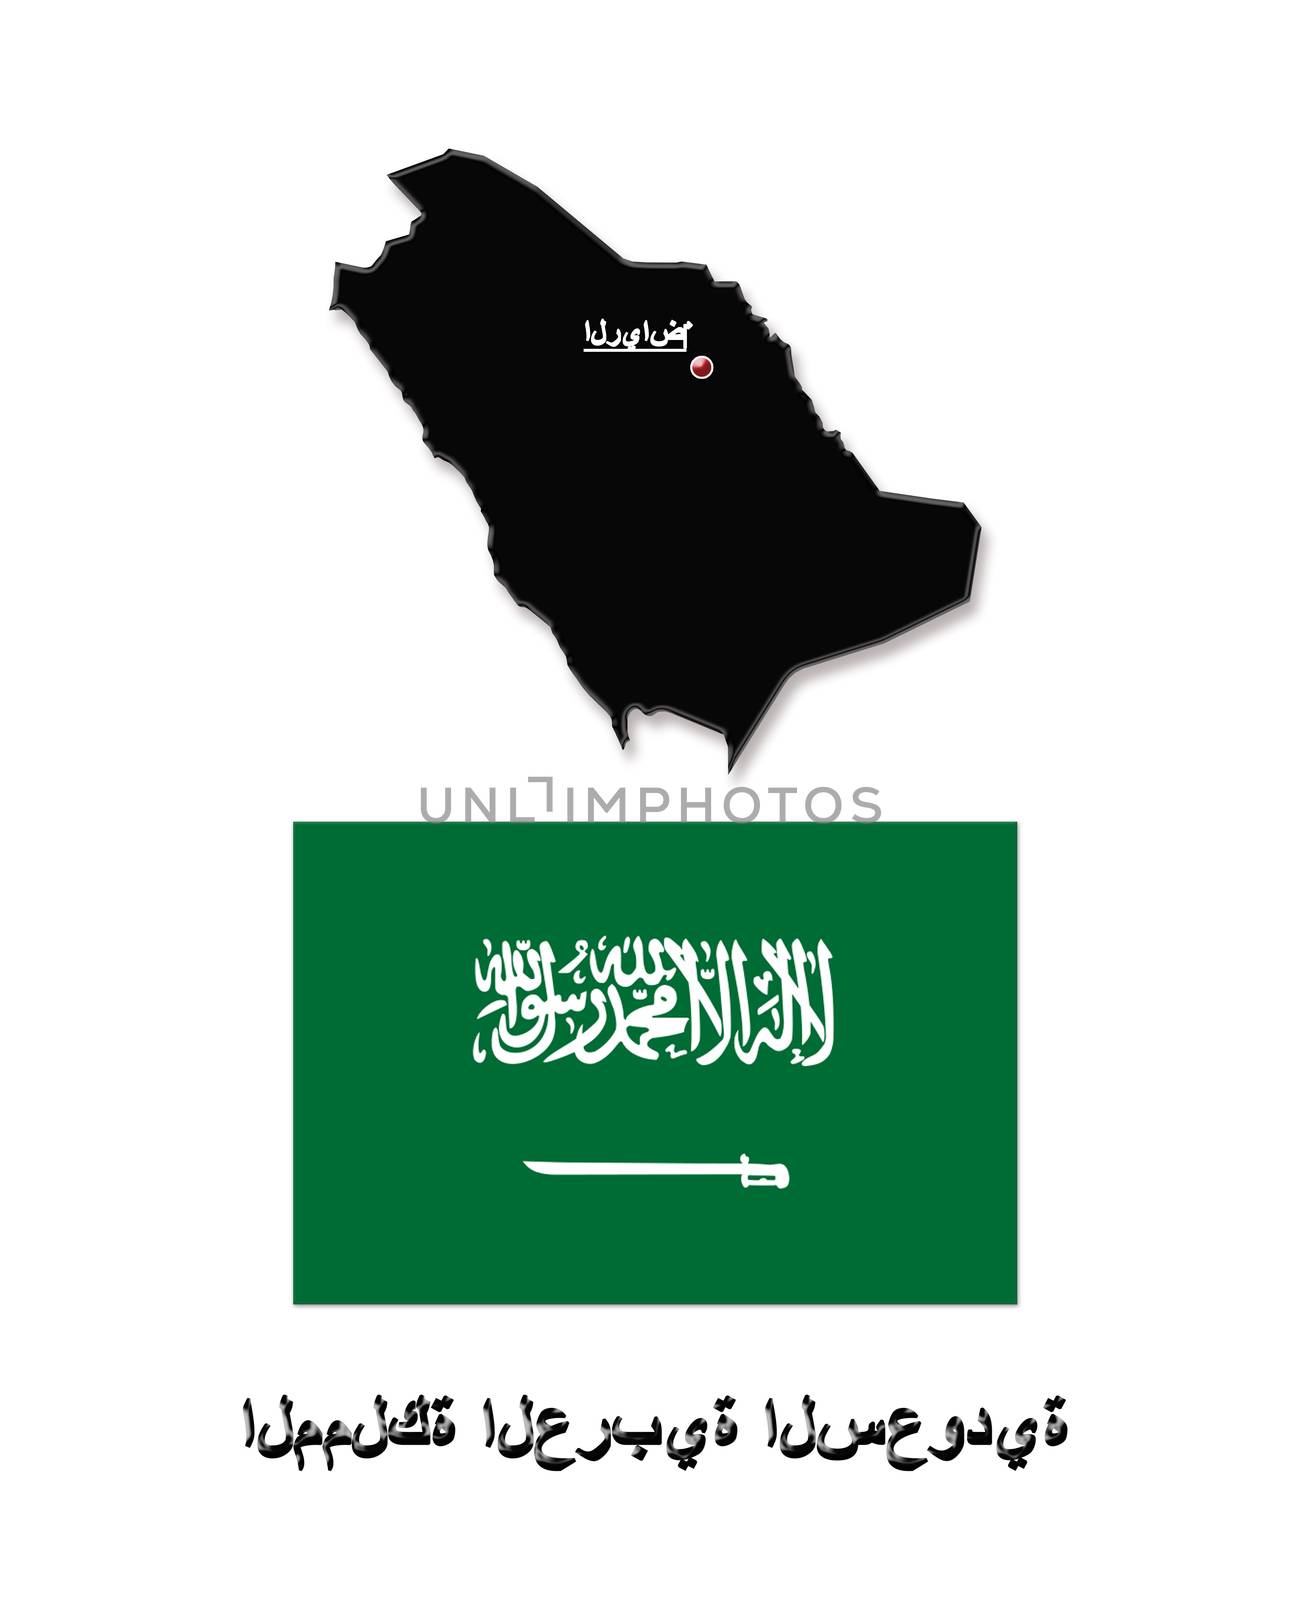 Map of Saudi Arabia and its flag in Arabic by alexmak